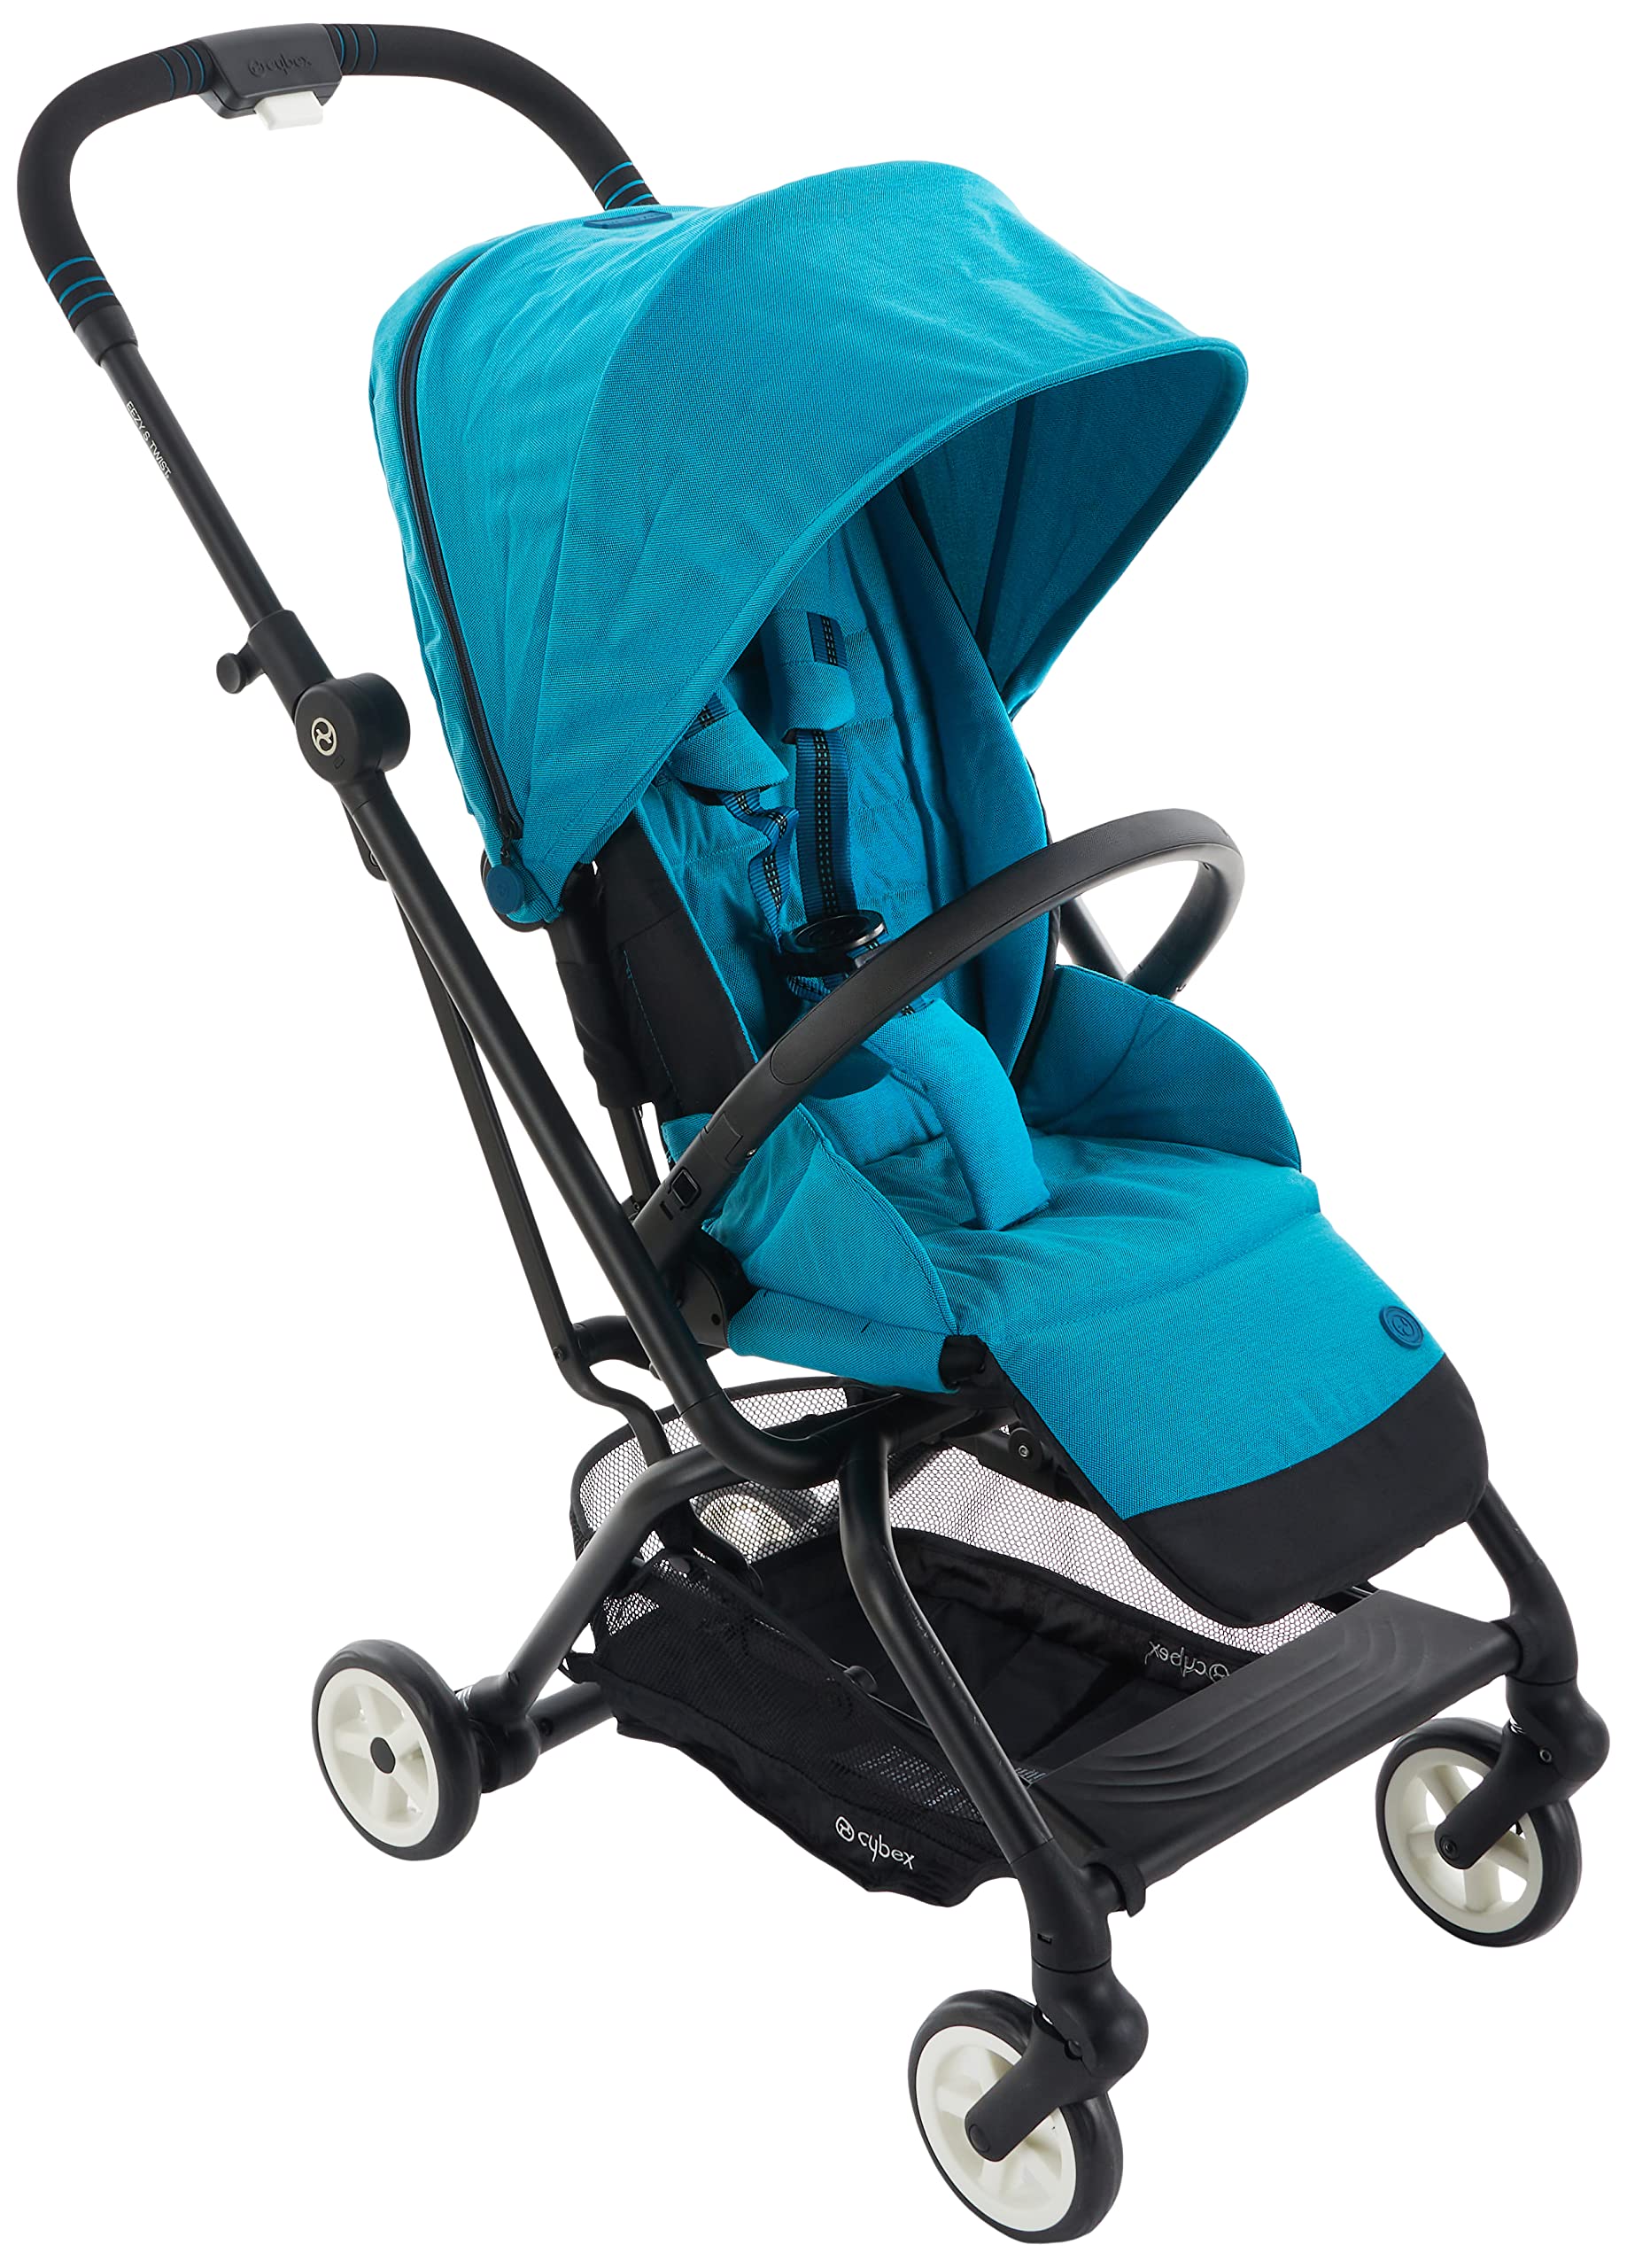 cYBEX Eezy S Twist 2 Stroller, 360A Rotating Seat, Parent Facing or Forward Facing, One-Hand Recline, compact Fold, Lightweight 